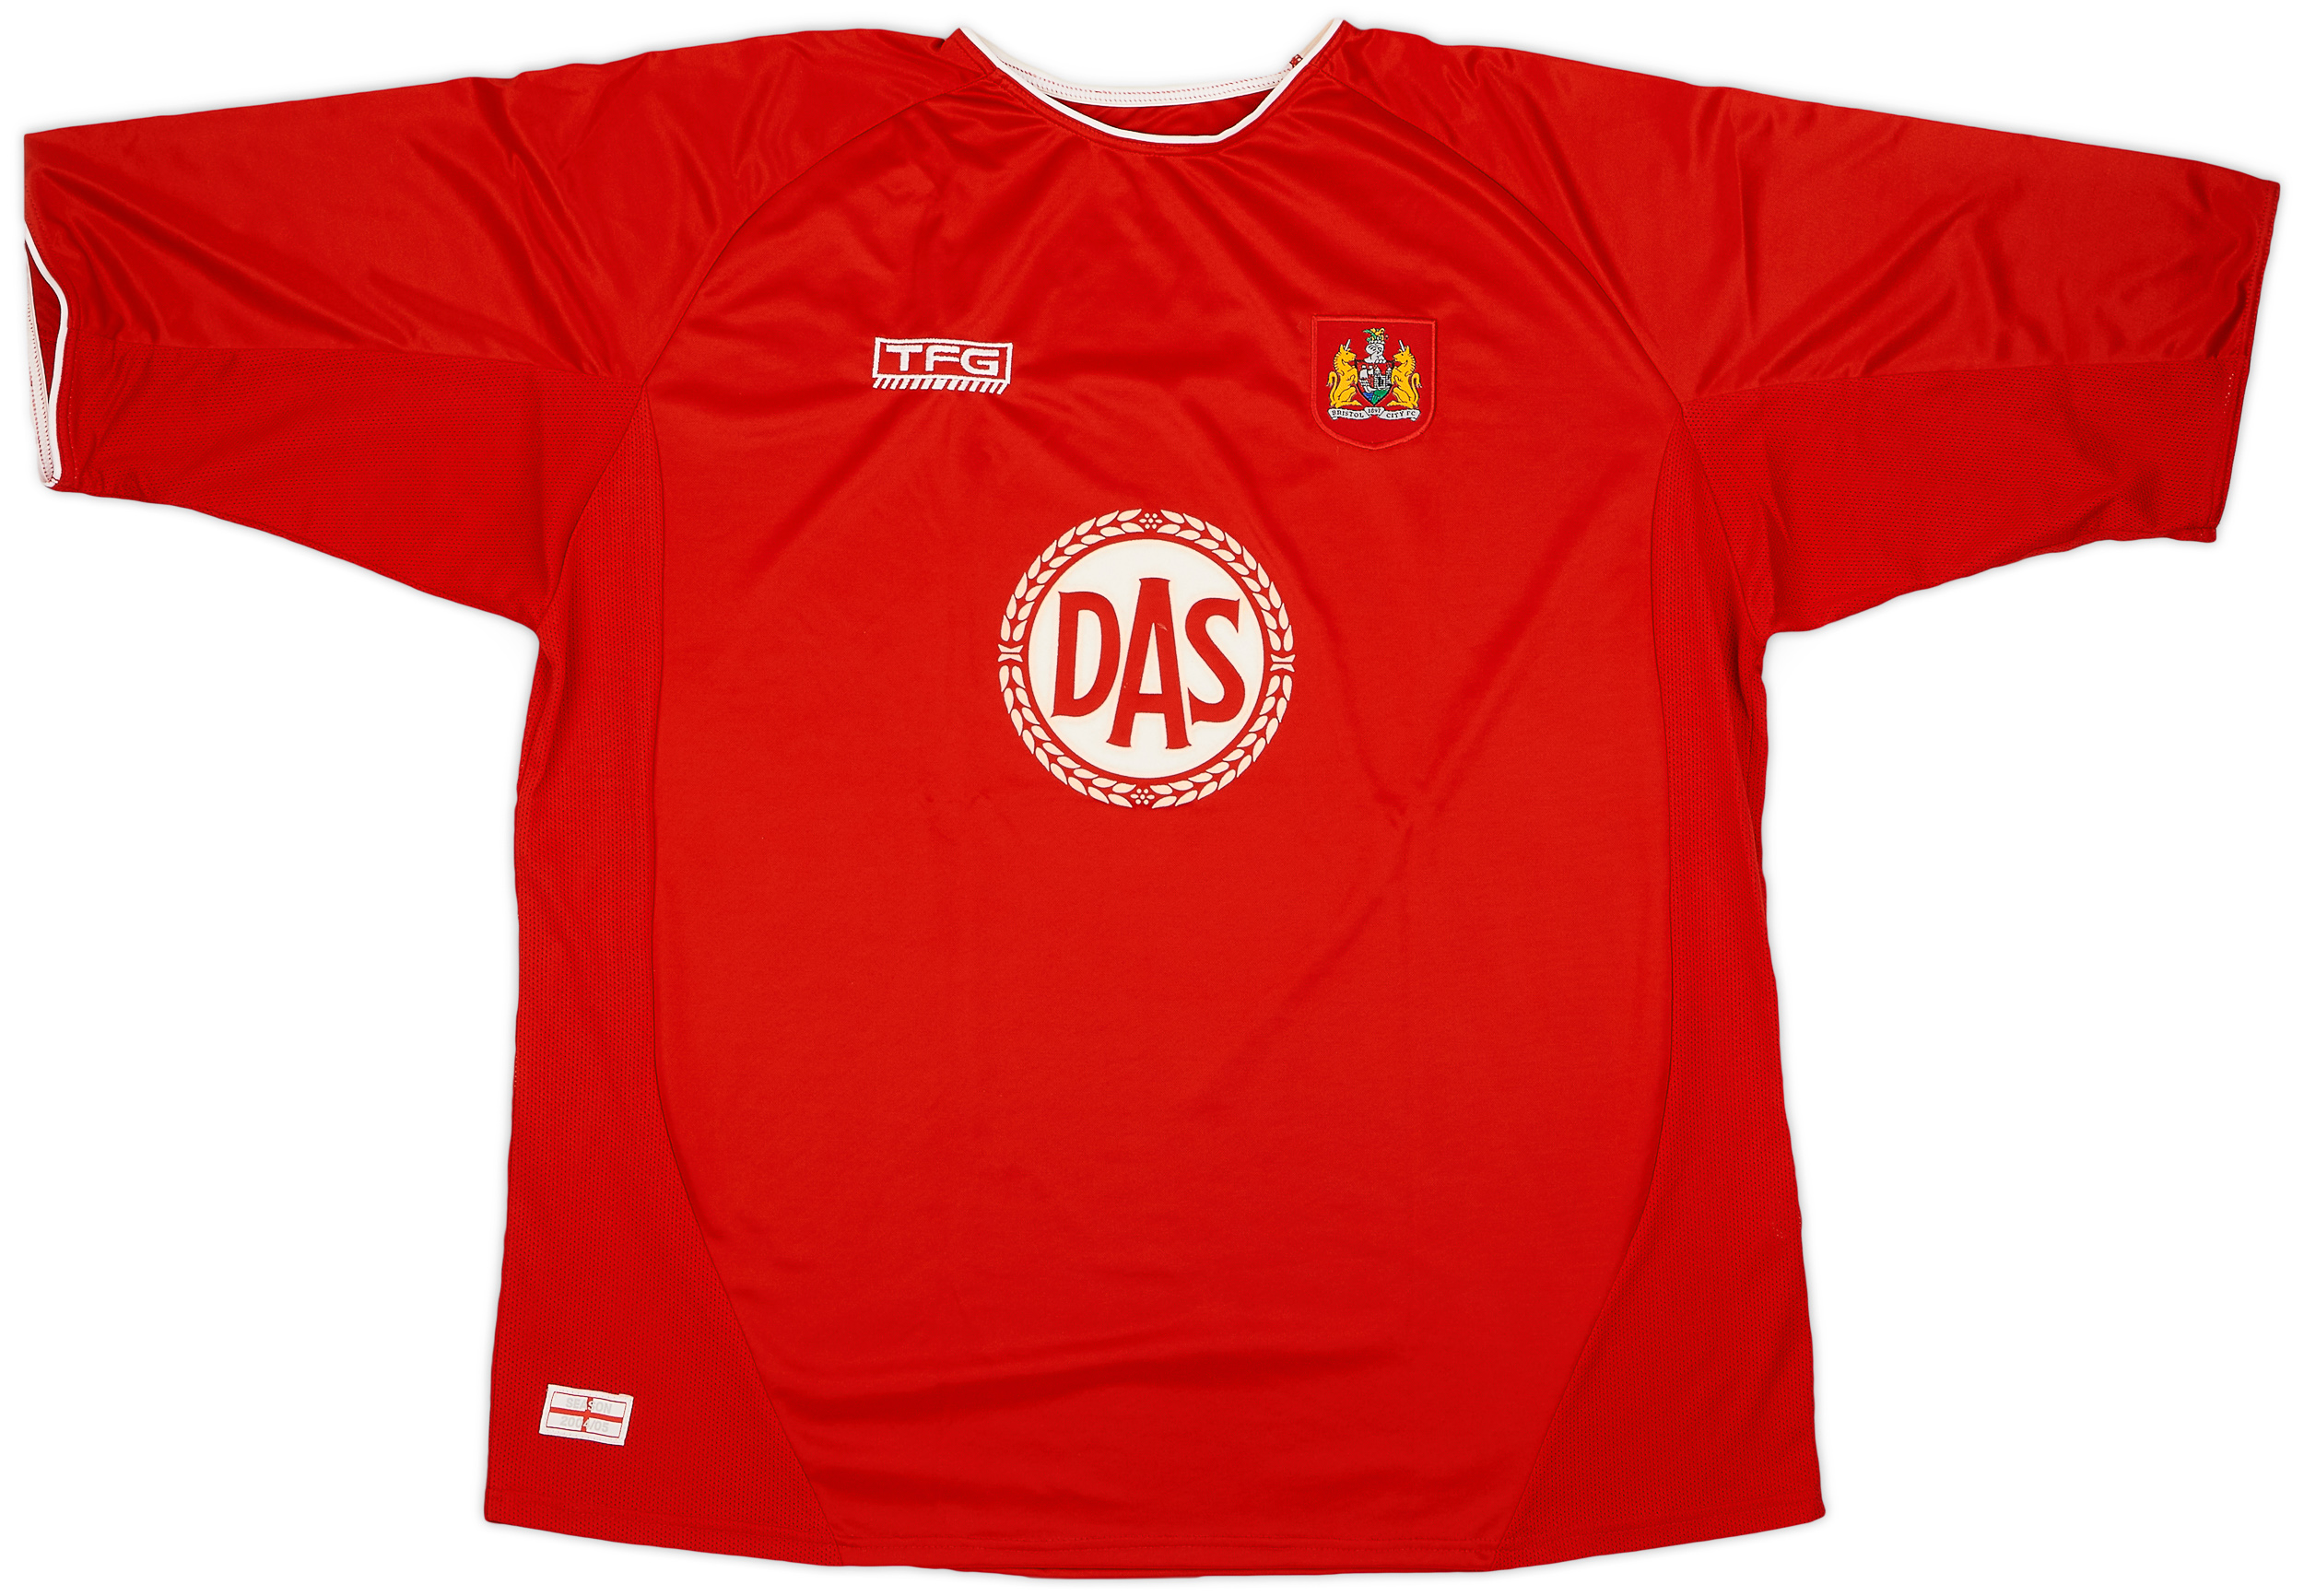 2004-05 Bristol City Home Shirt - 9/10 - ()